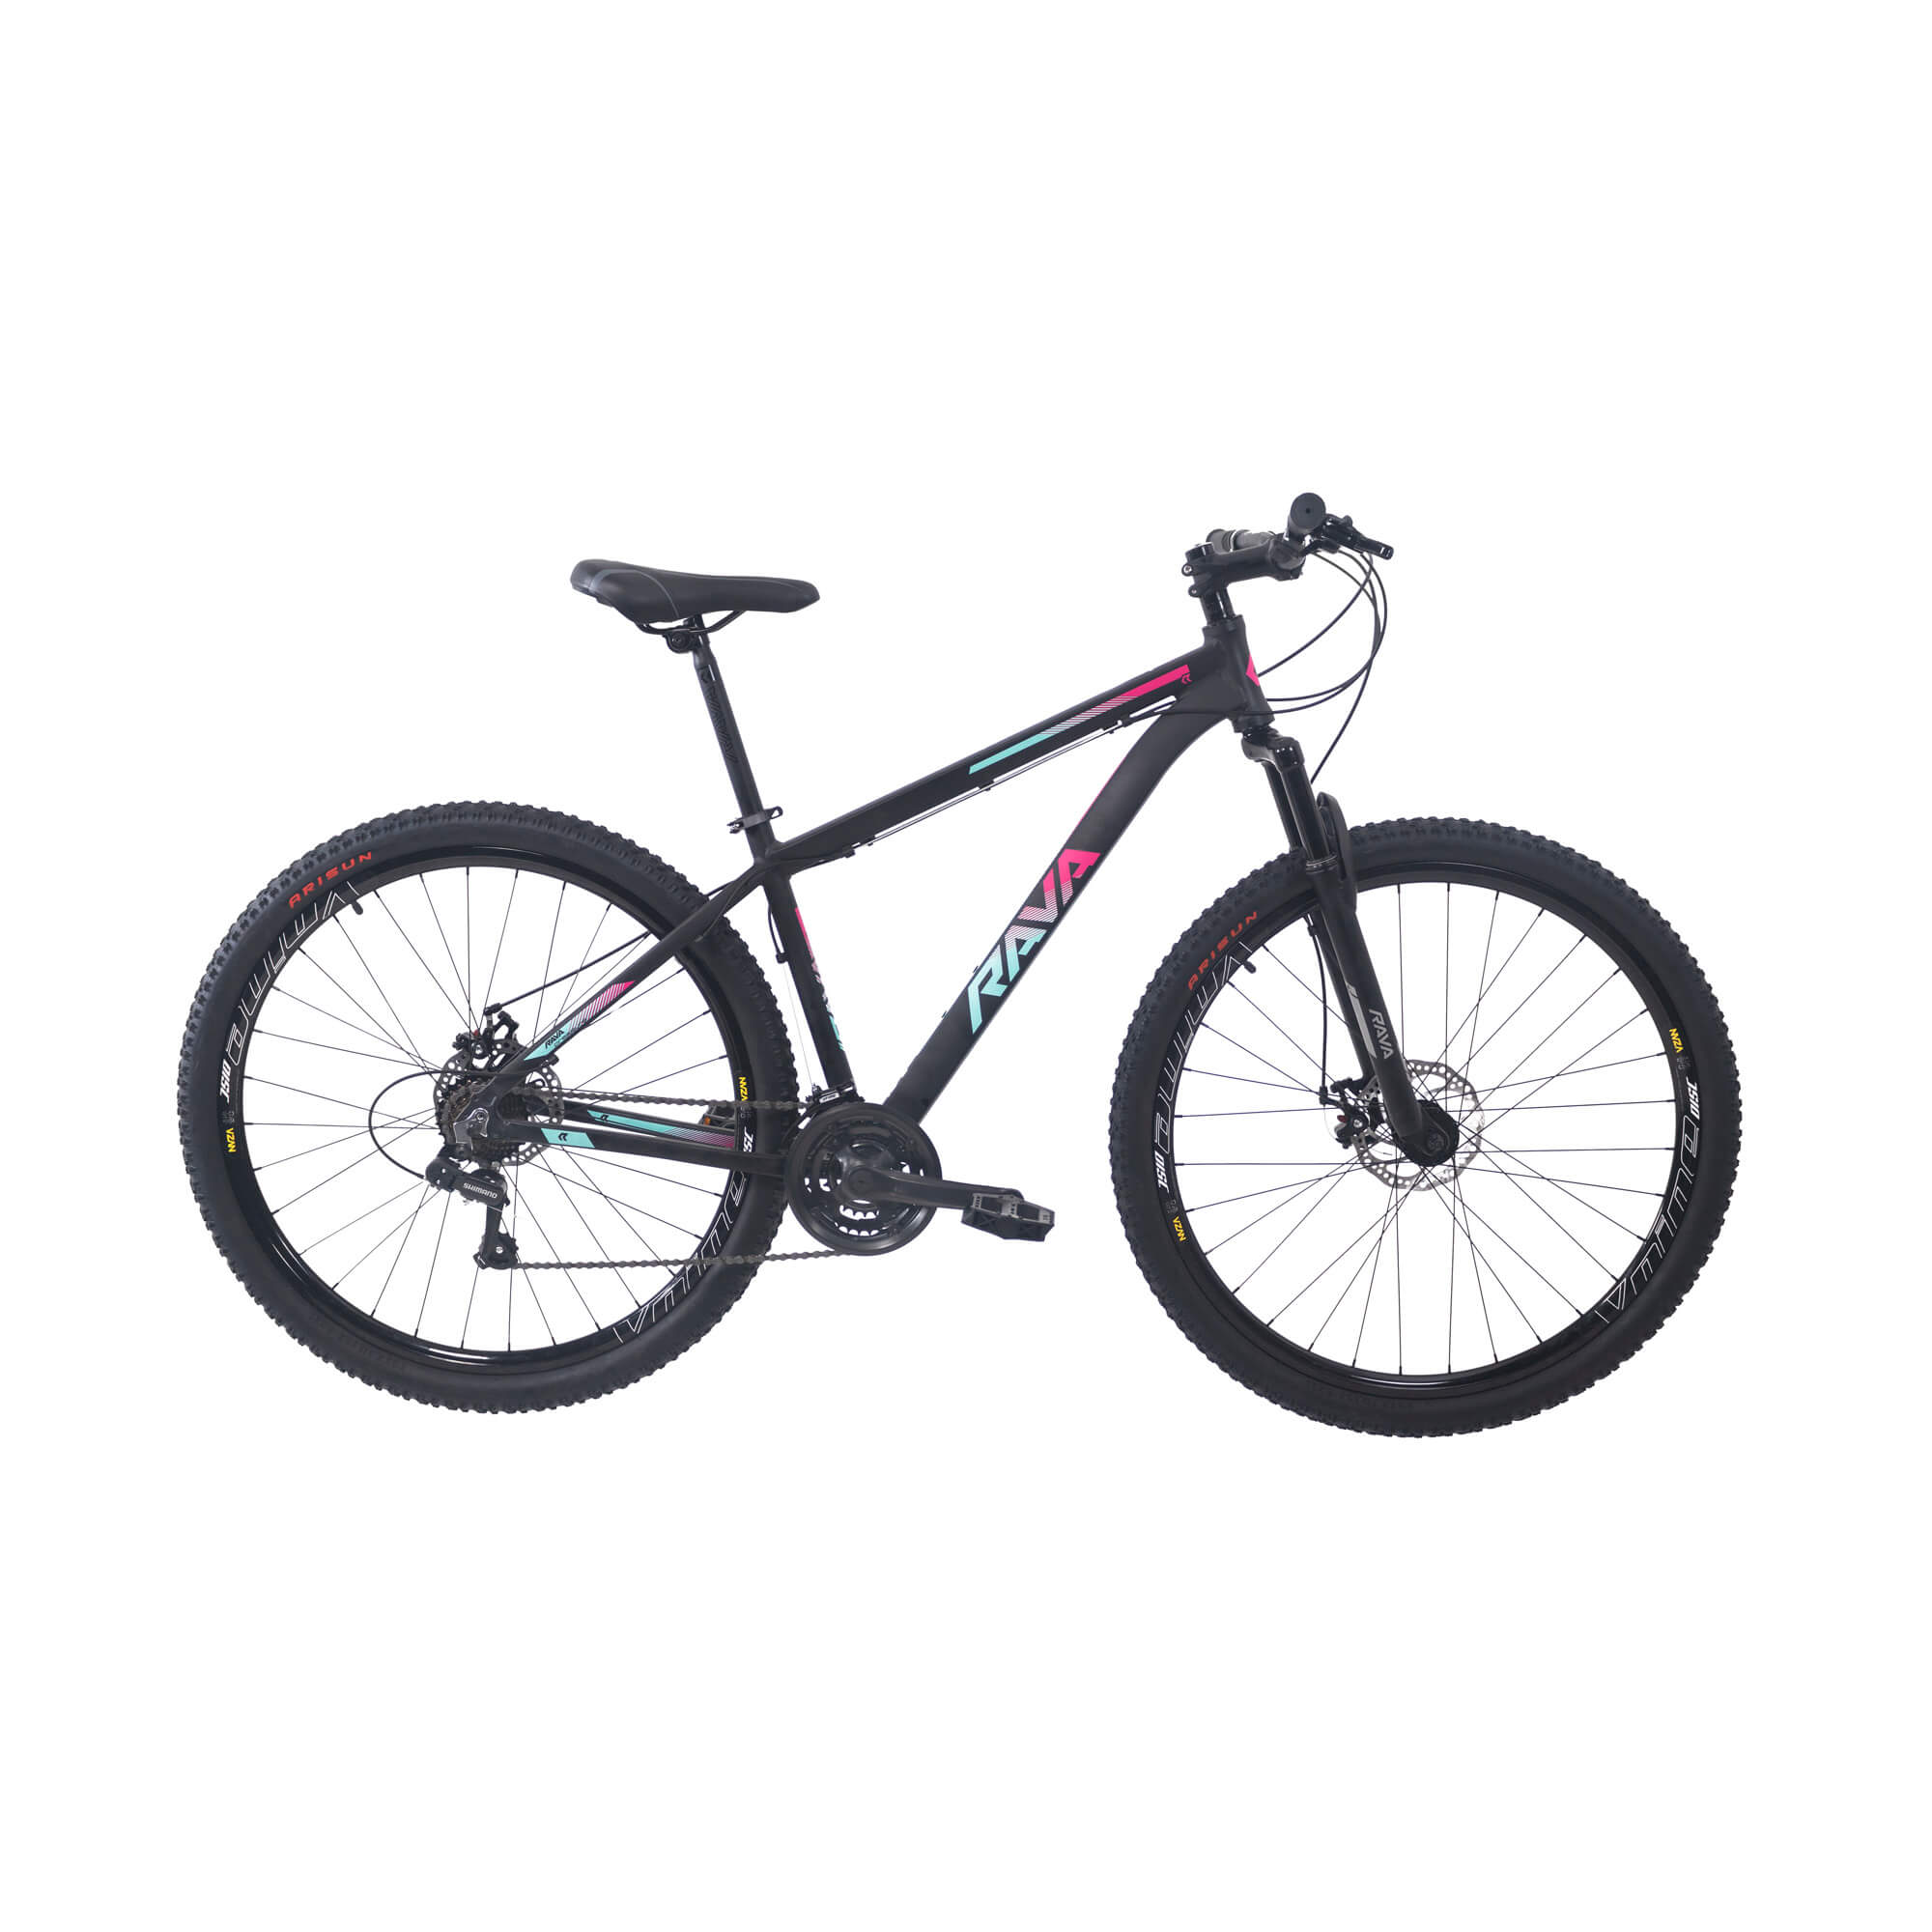 Bicicleta Rava Pressure 2019/2020 | 21 v. - Preto/Pink/Azul, 15.5"